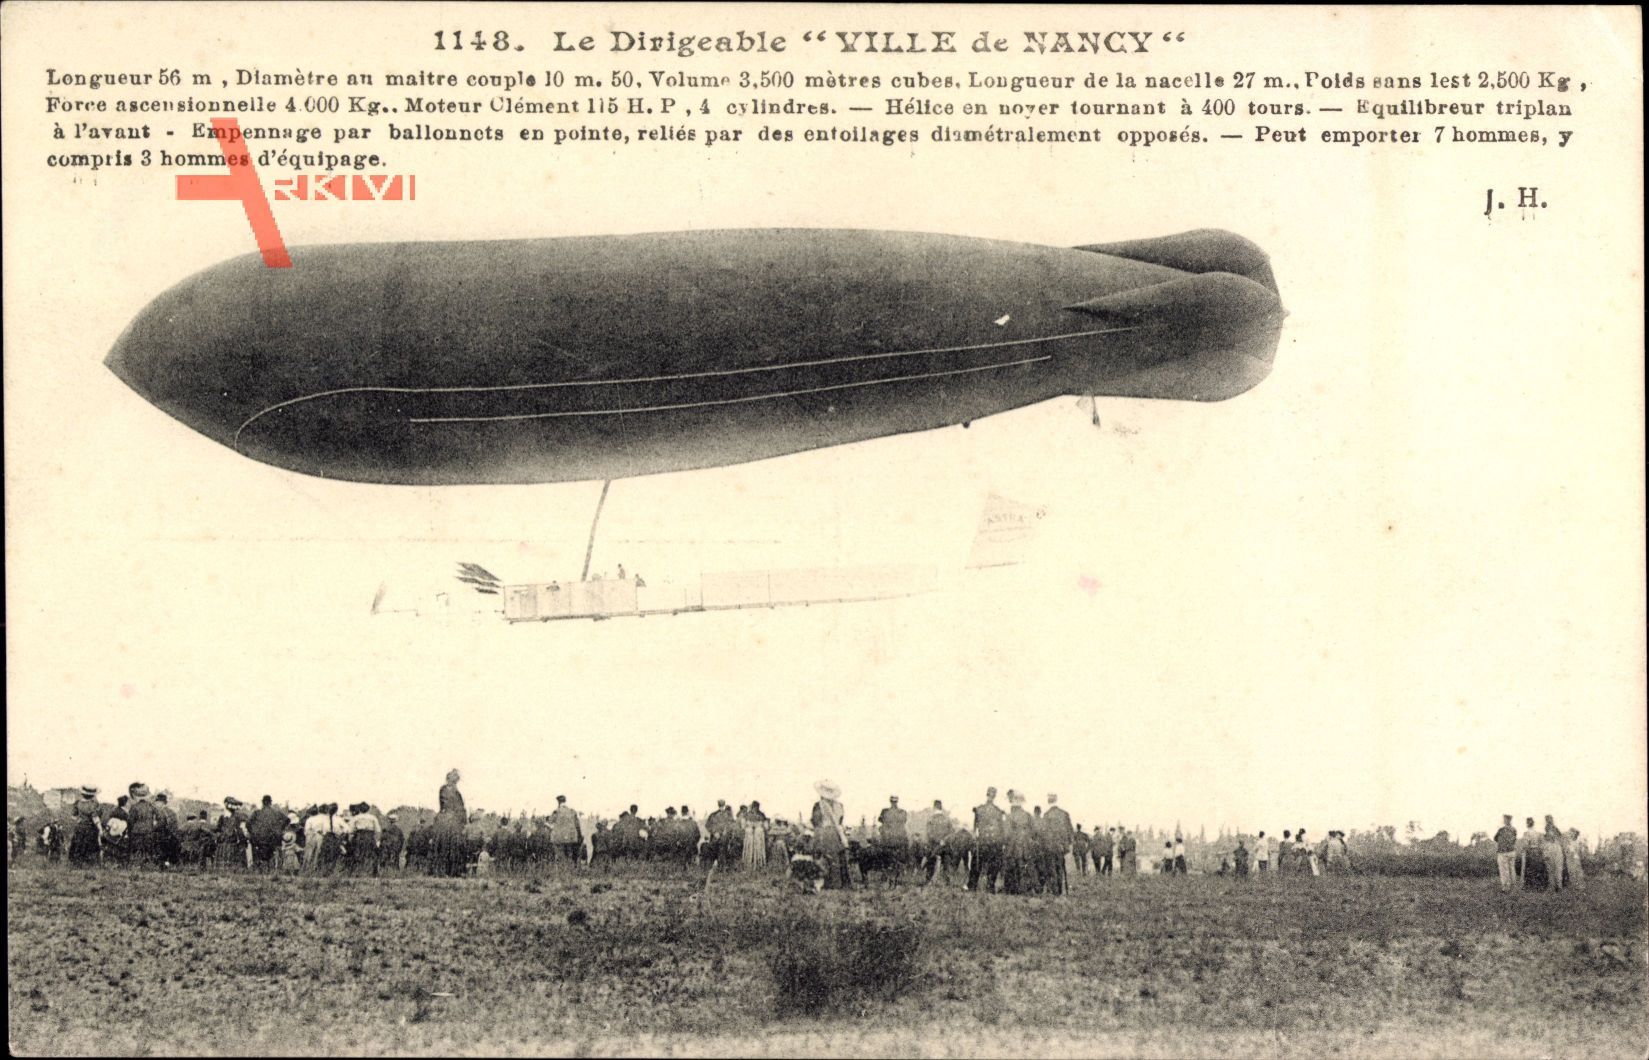 Dirigéable Ville de Nancy, Zeppelin über einem Landefeld